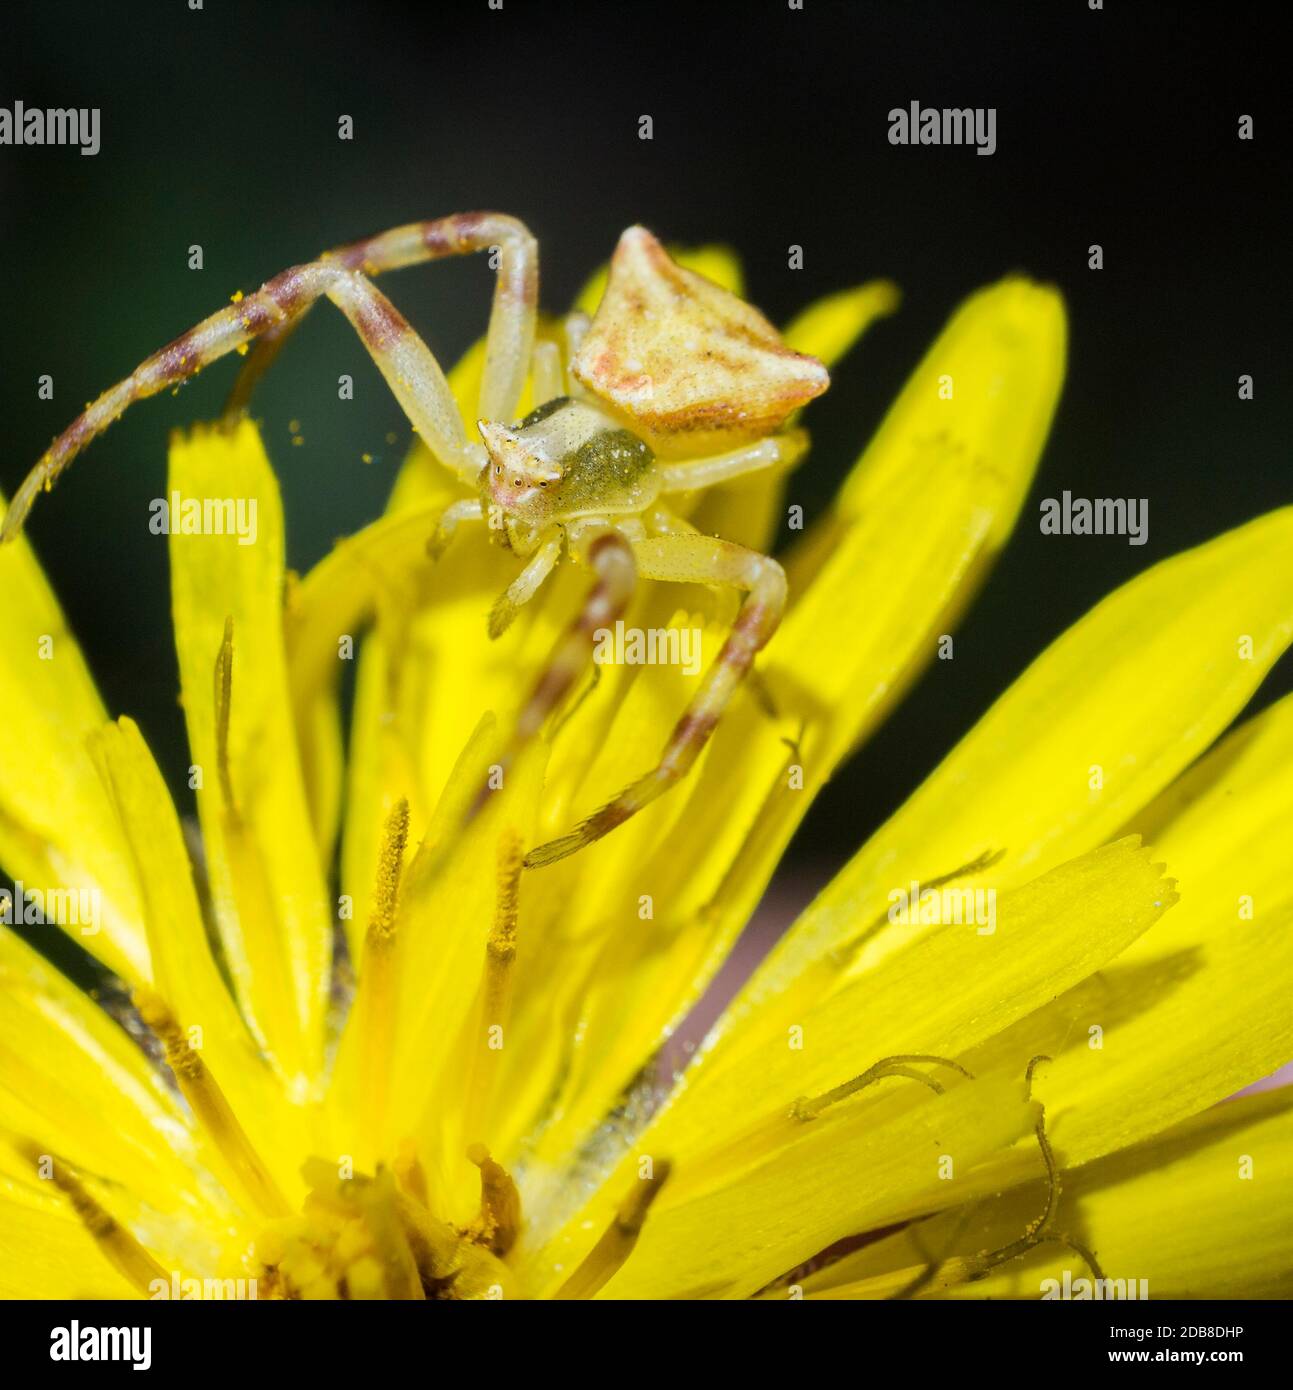 Thomisus onustus. Araña amarilla y verde de 2 milímetros. Arácnidos. Artrópodos. Macrofotografía. Madrid Stock Photo